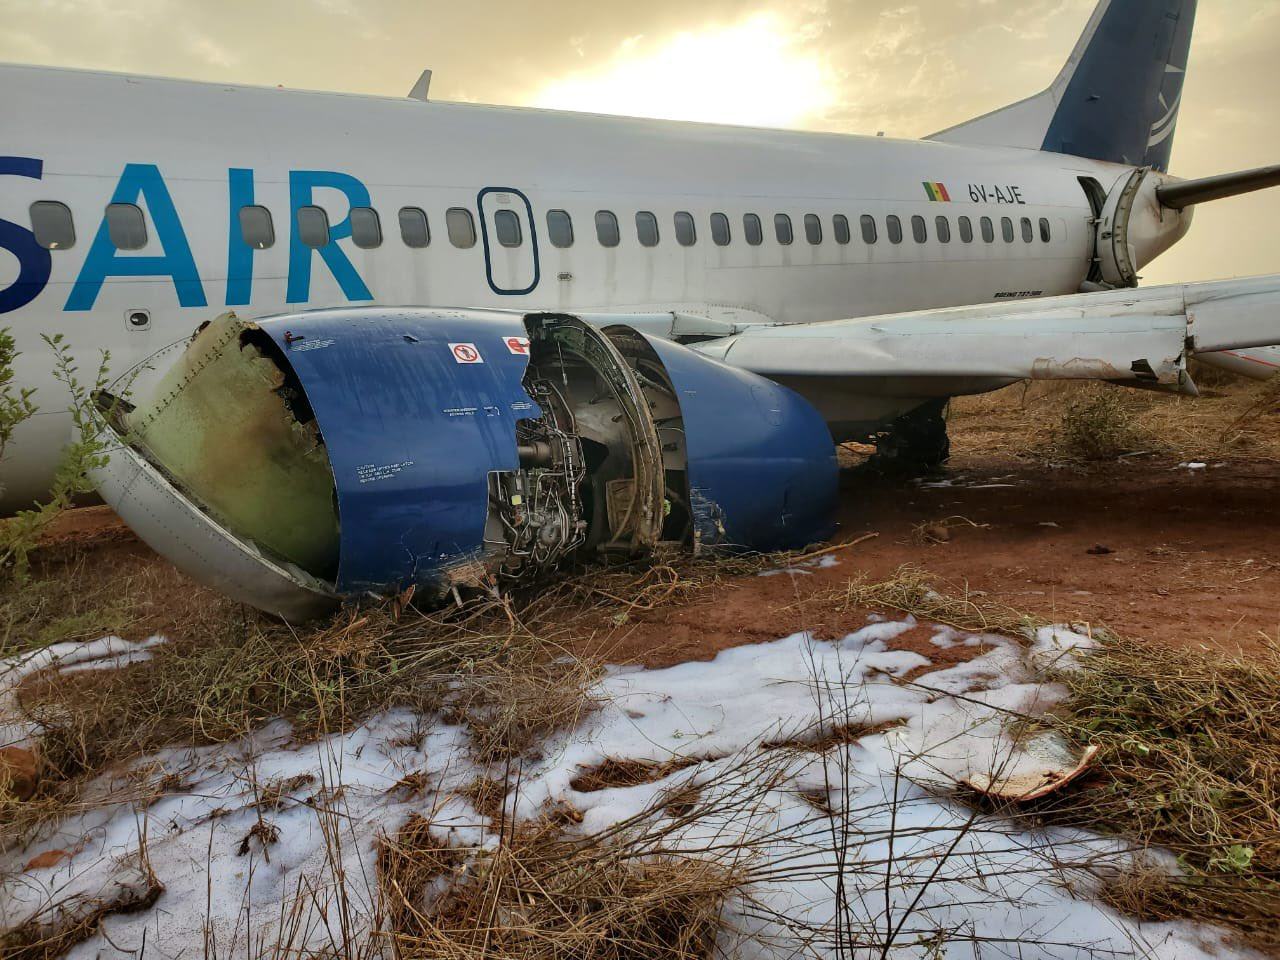 A Boeing 737 plane skidded off a runway at the airport in Dakar, Senegal’s capital. Photo: X/JACDEC